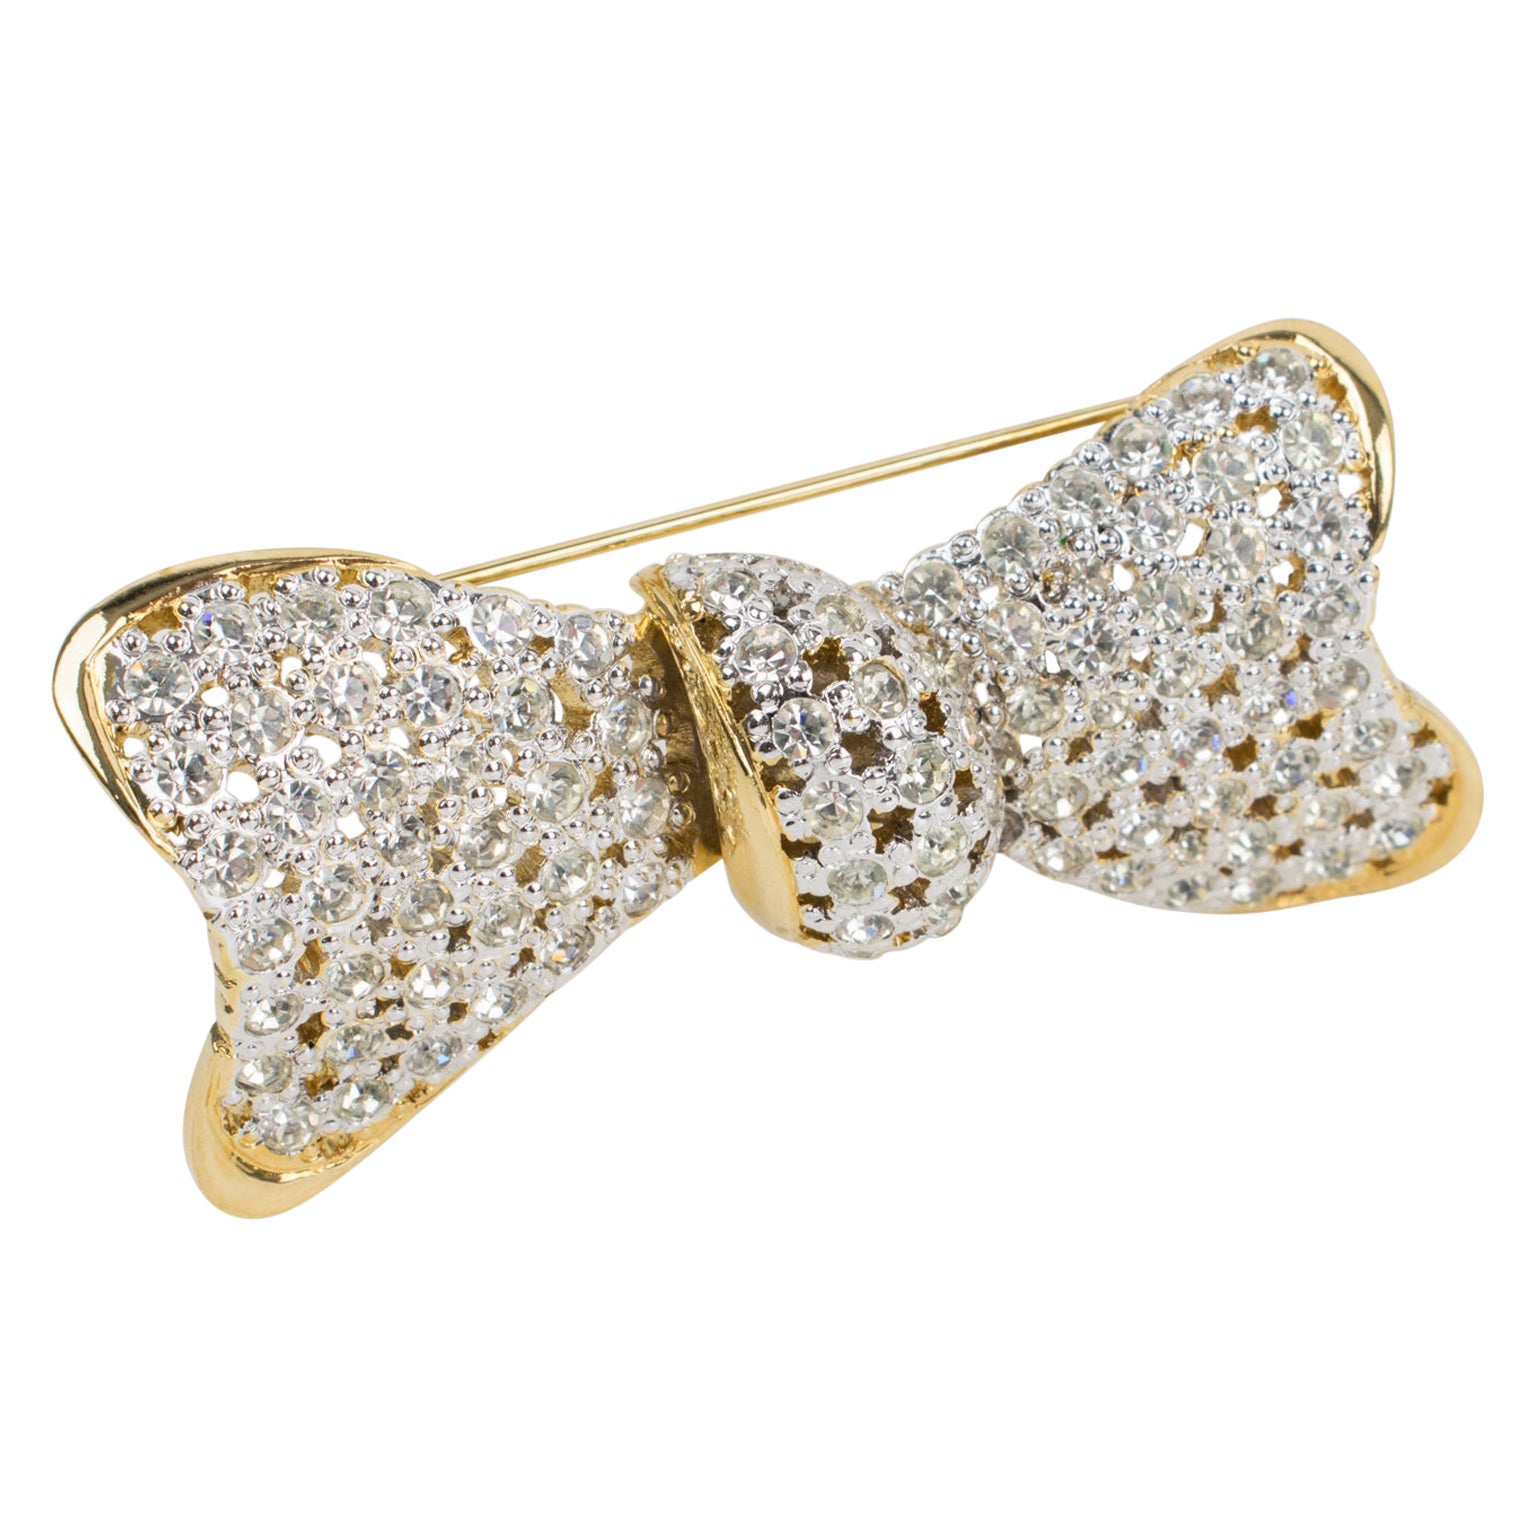 Valentino Garavani Jeweled Bowtie Pin Brooch For Sale